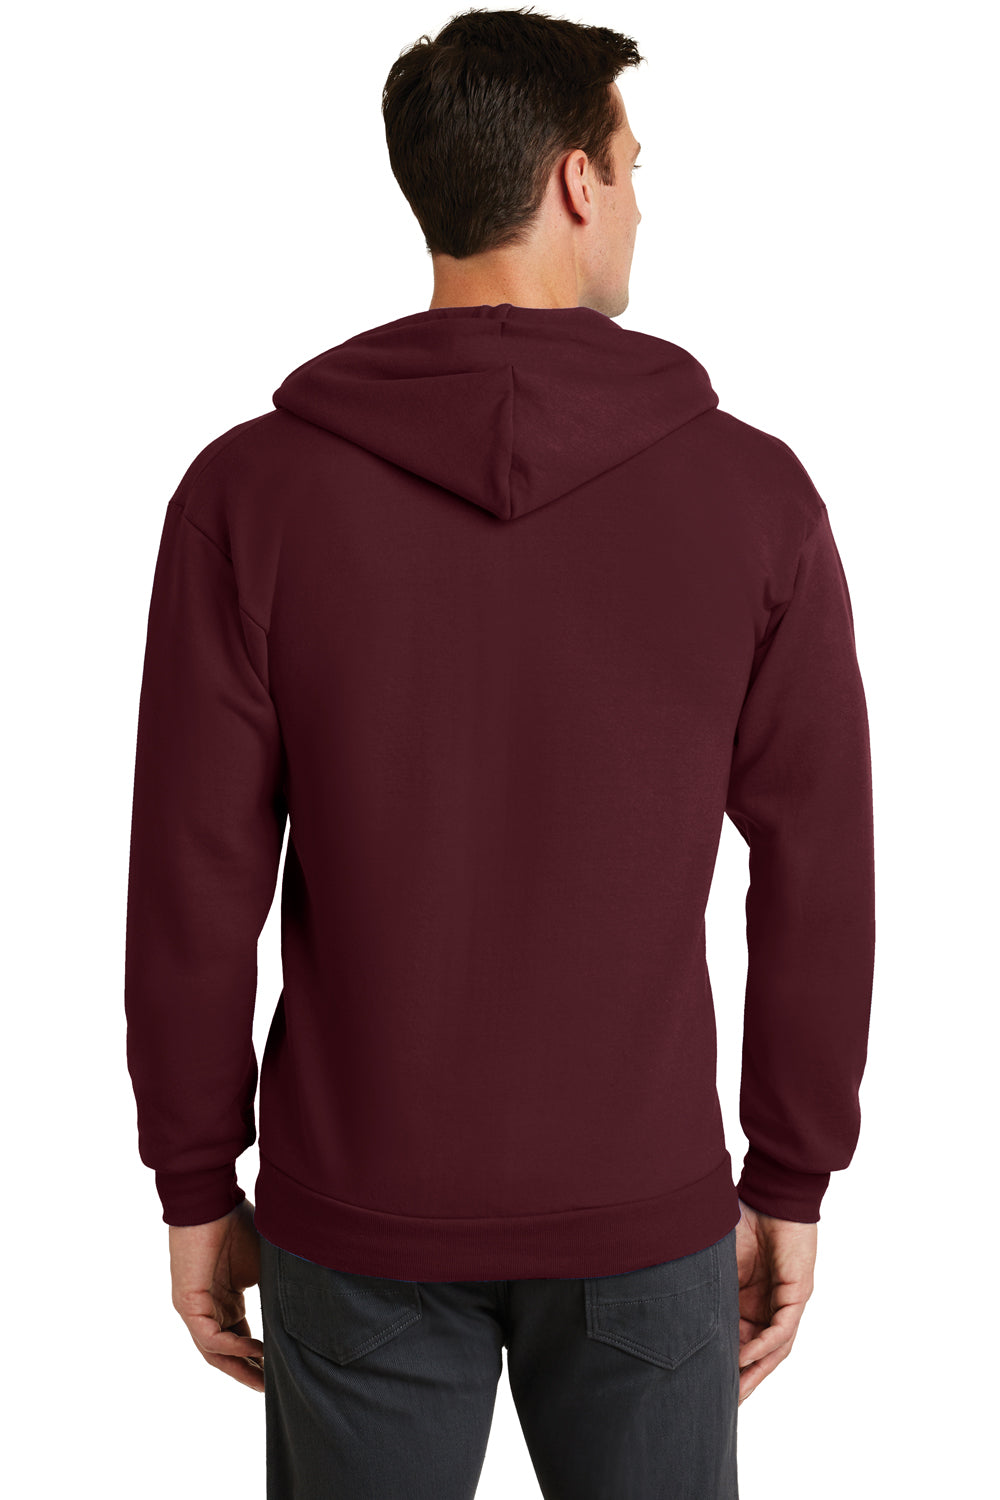 Port & Company PC78ZH Mens Core Fleece Full Zip Hooded Sweatshirt Hoodie Maroon Back